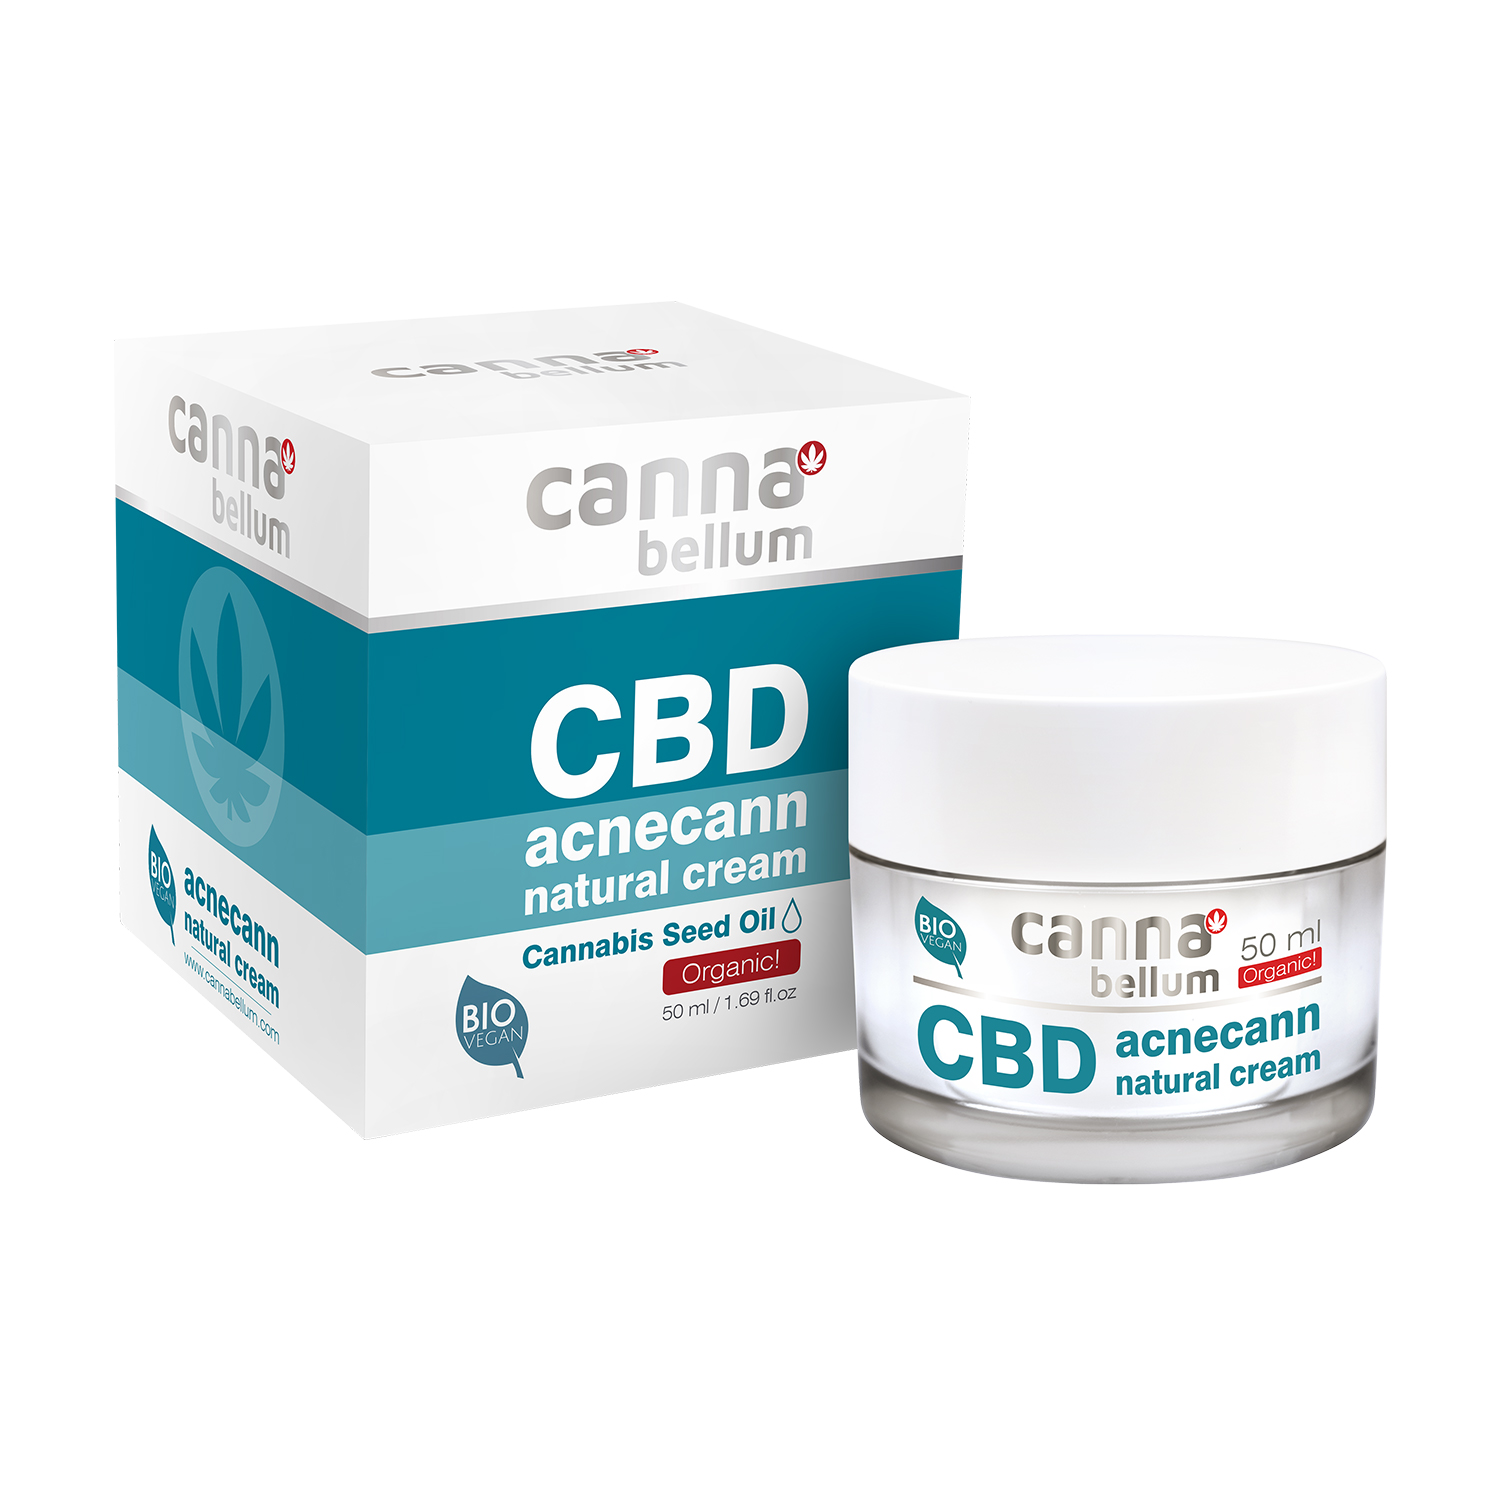 Cannabellum CBD acnecann natural cream 50ml P1244 komplet WEB 85